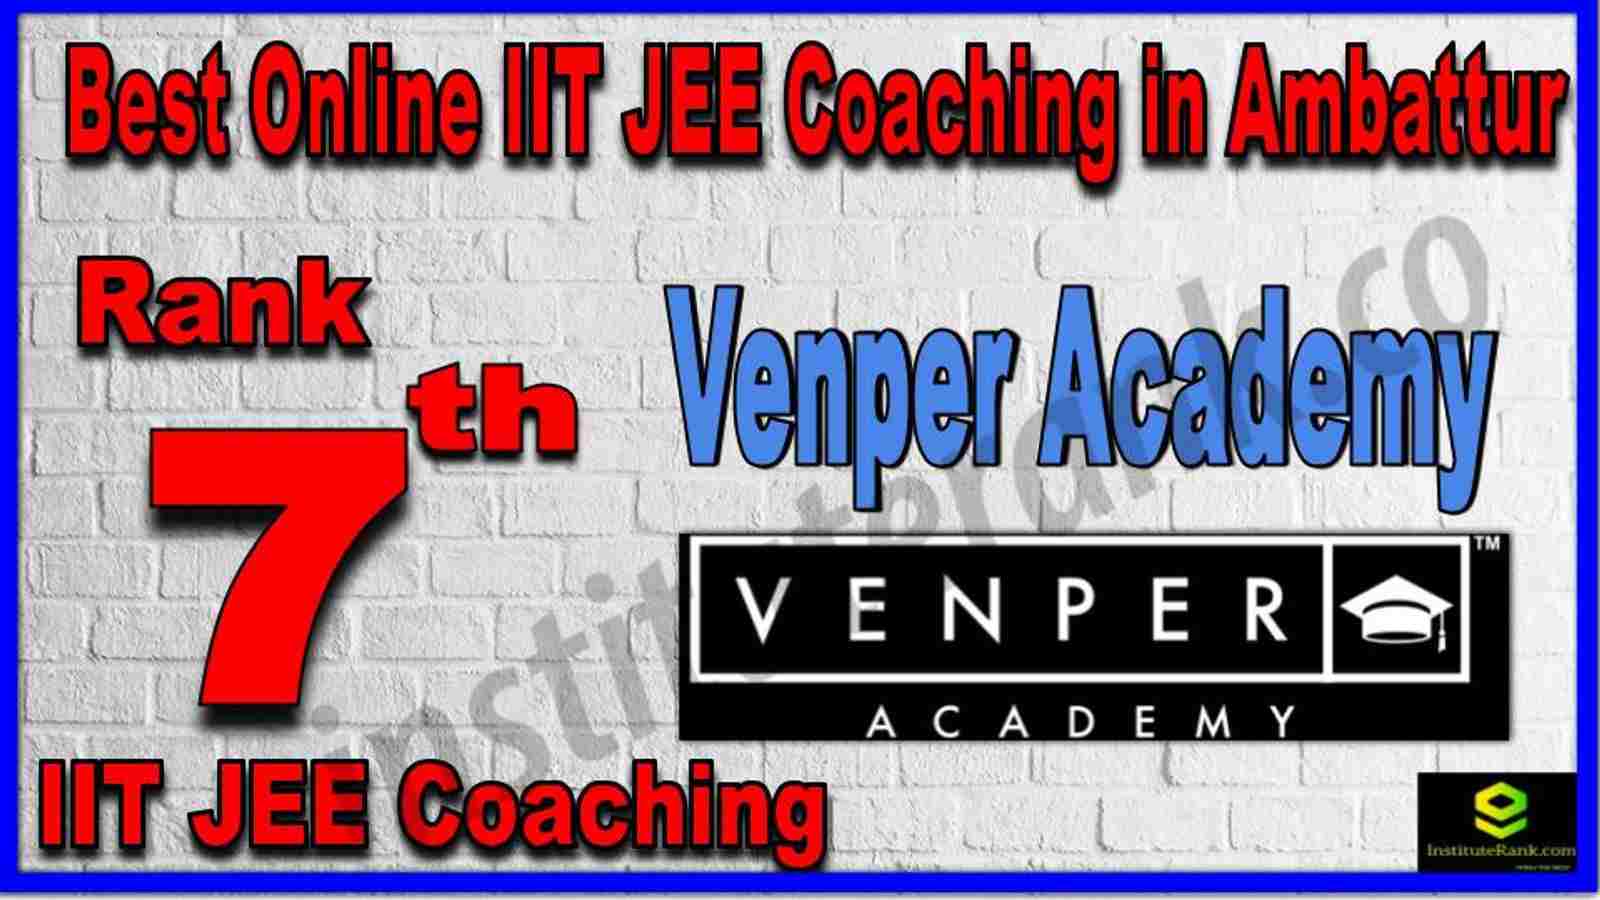 Rank 7th Best Online IIT JEE Coaching in Ambattur